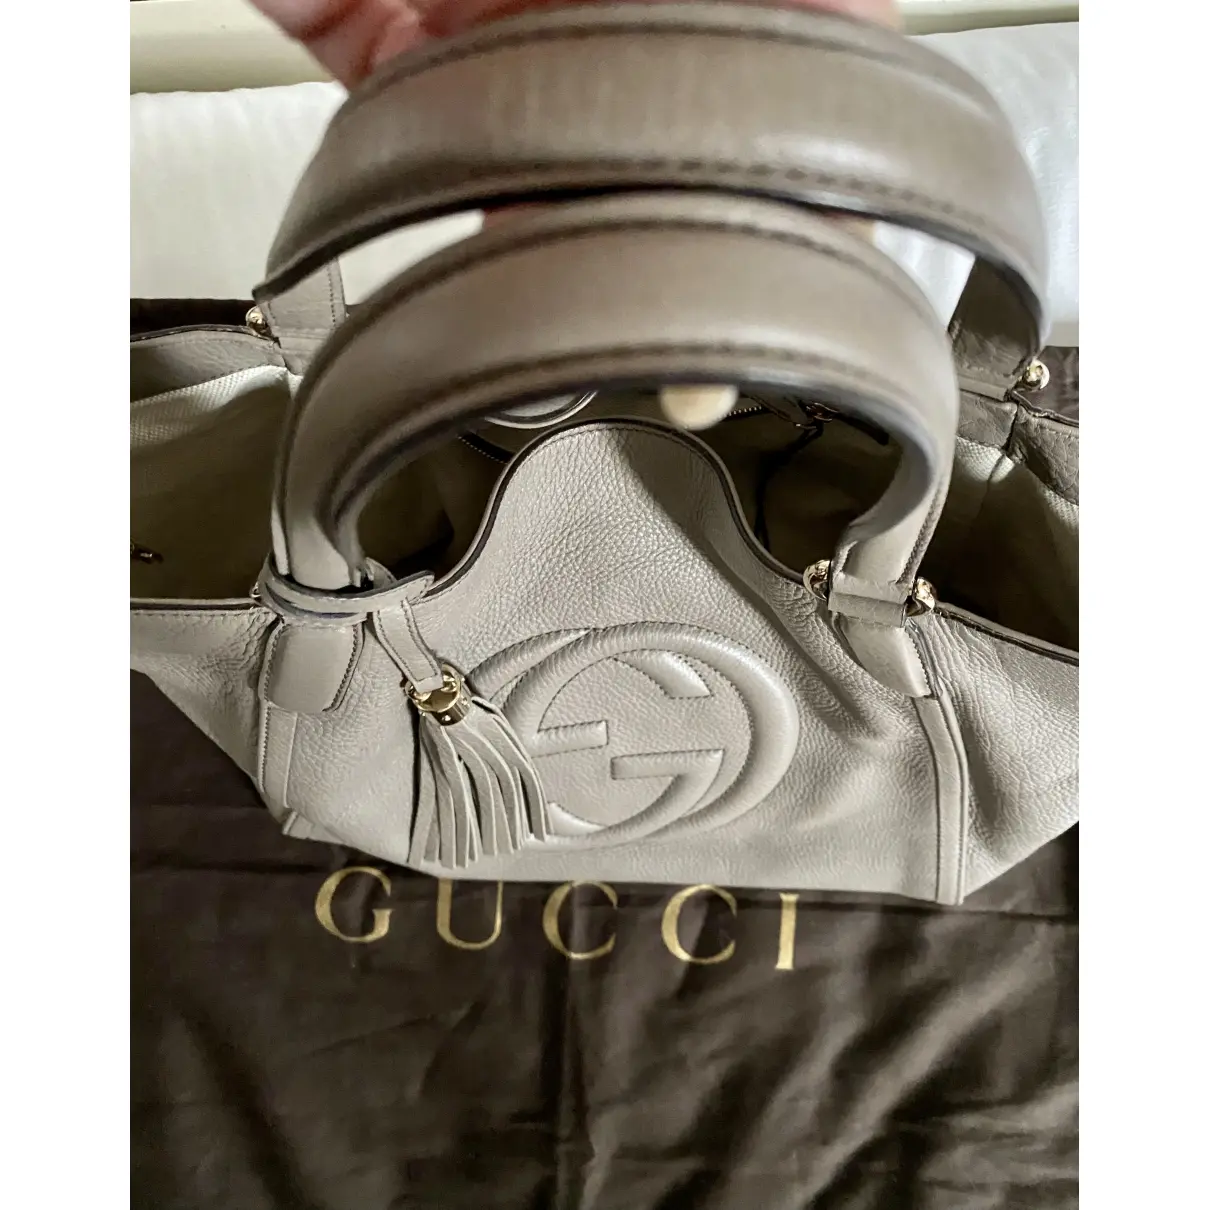 Buy Gucci Soho leather handbag online